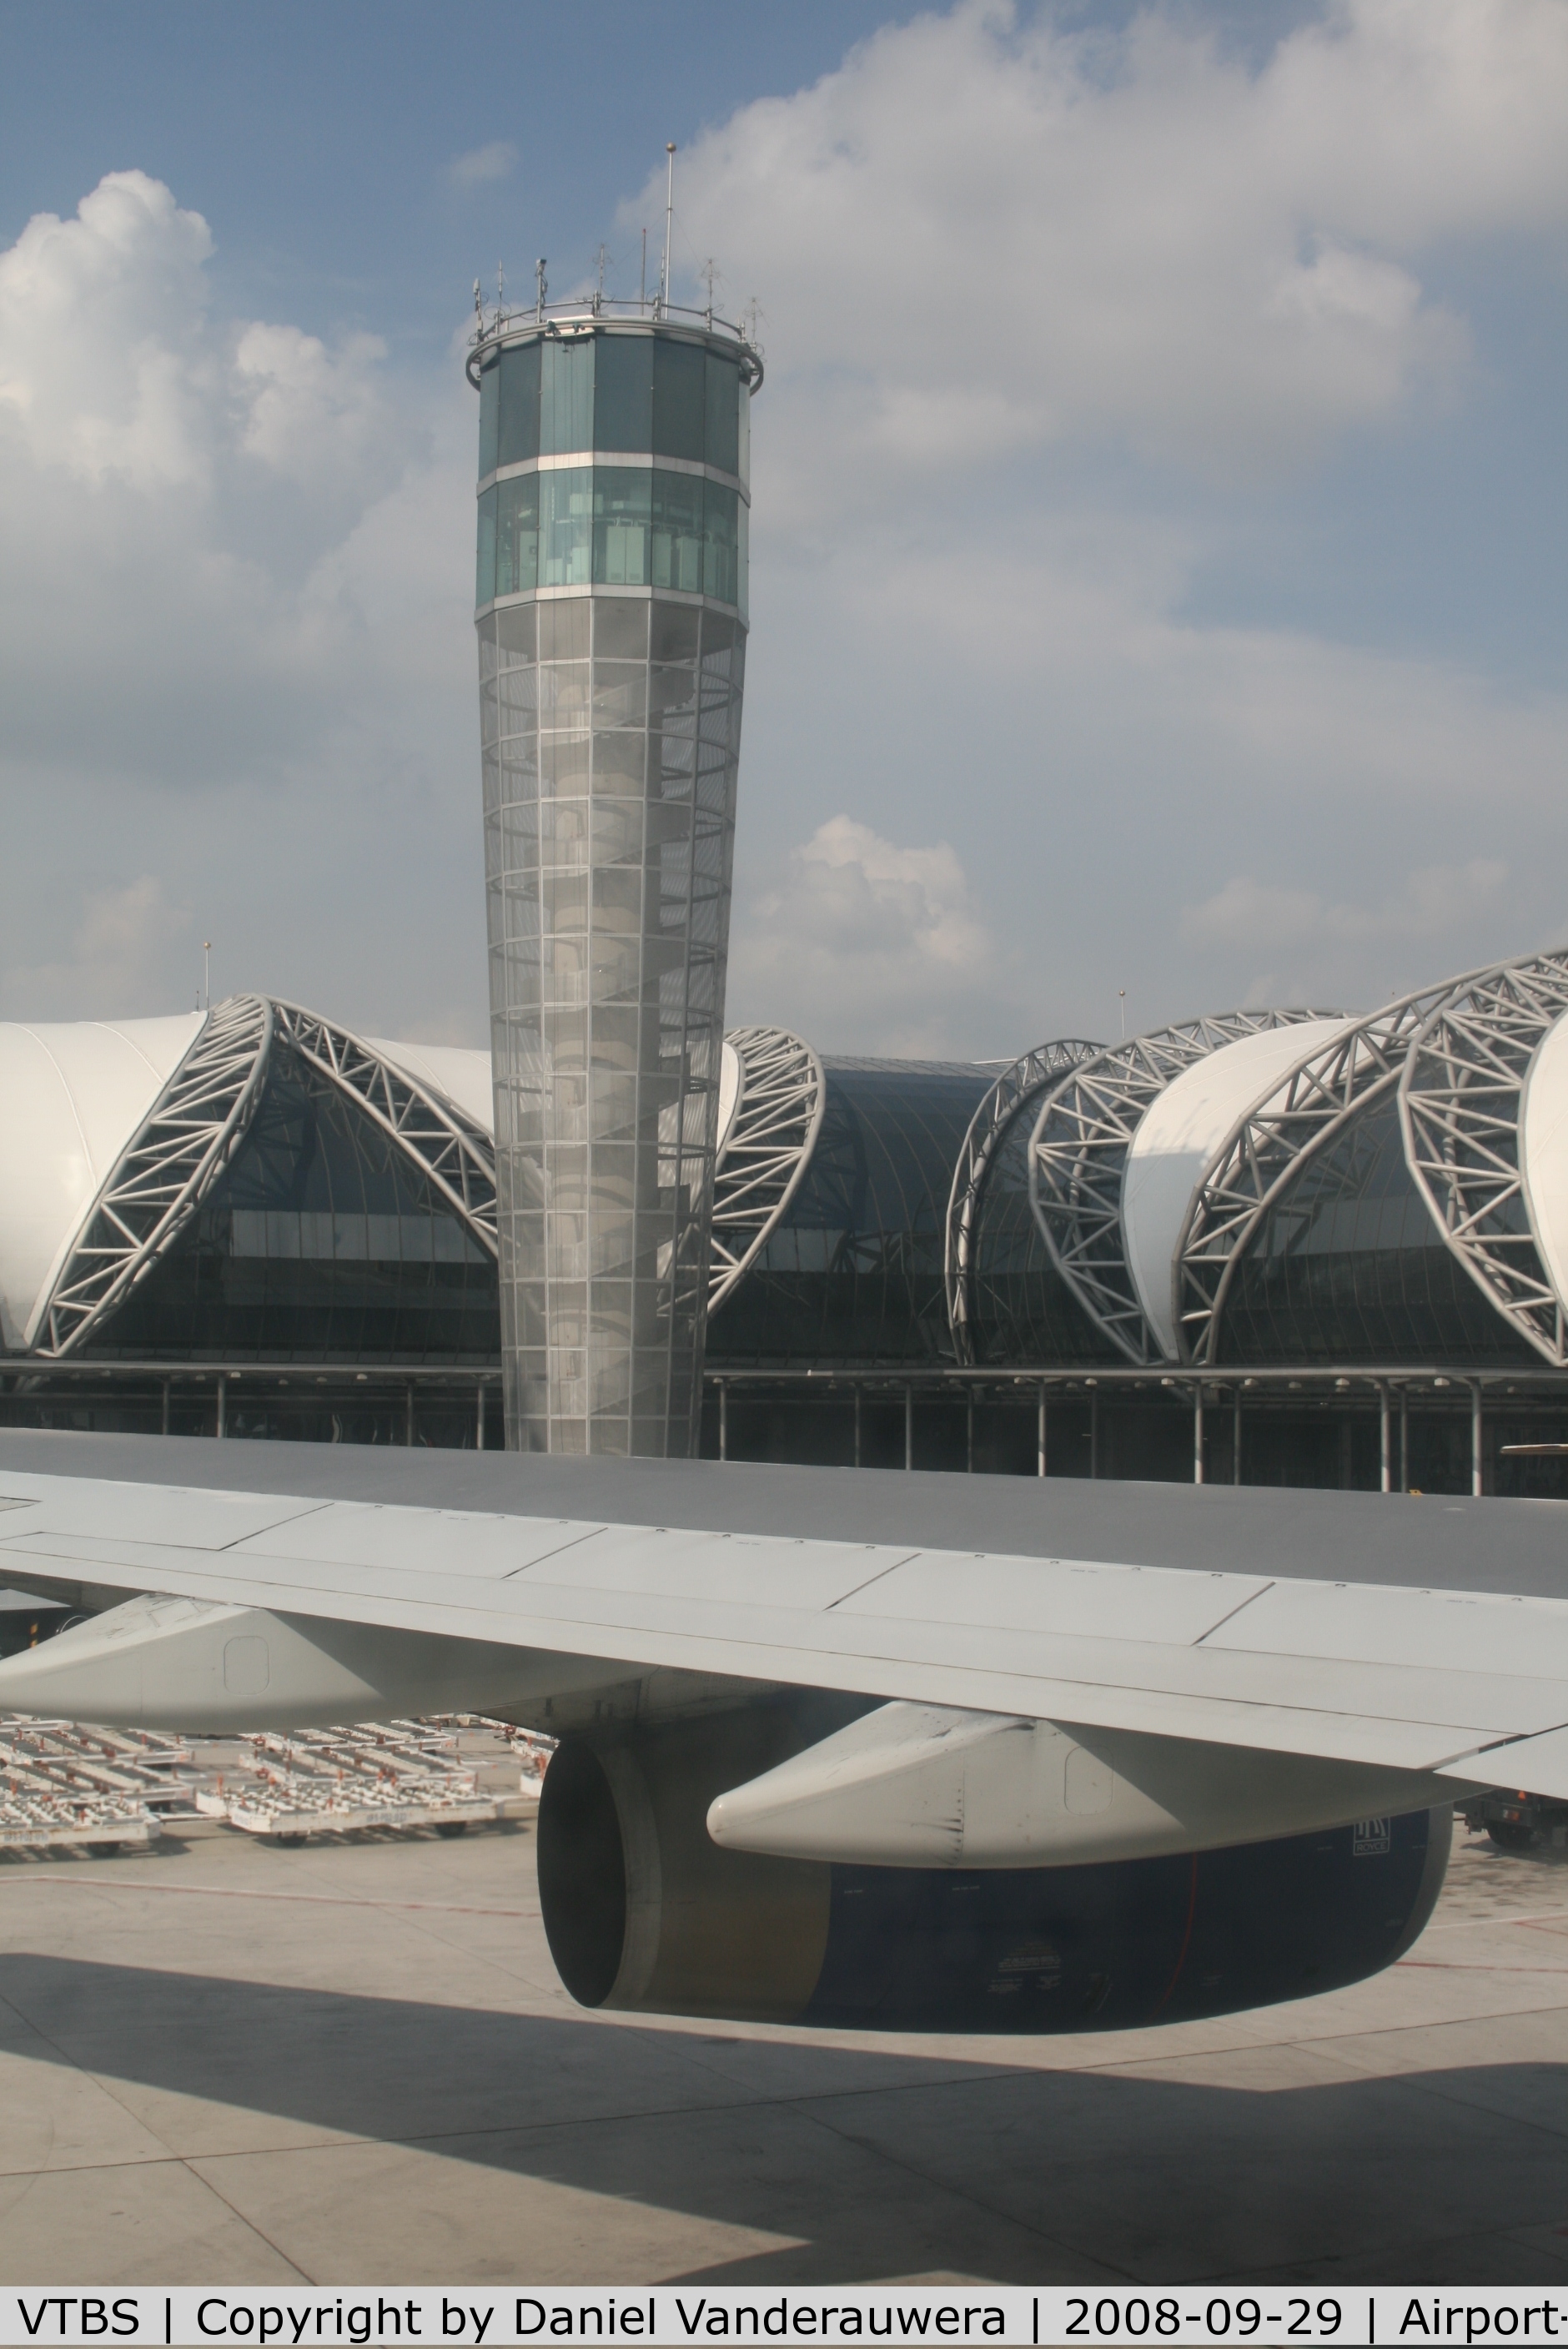 Suvarnabhumi Airport (New Bangkok International Airport), Samut Prakan (near Bangkok) Thailand (VTBS) - arriving to gate